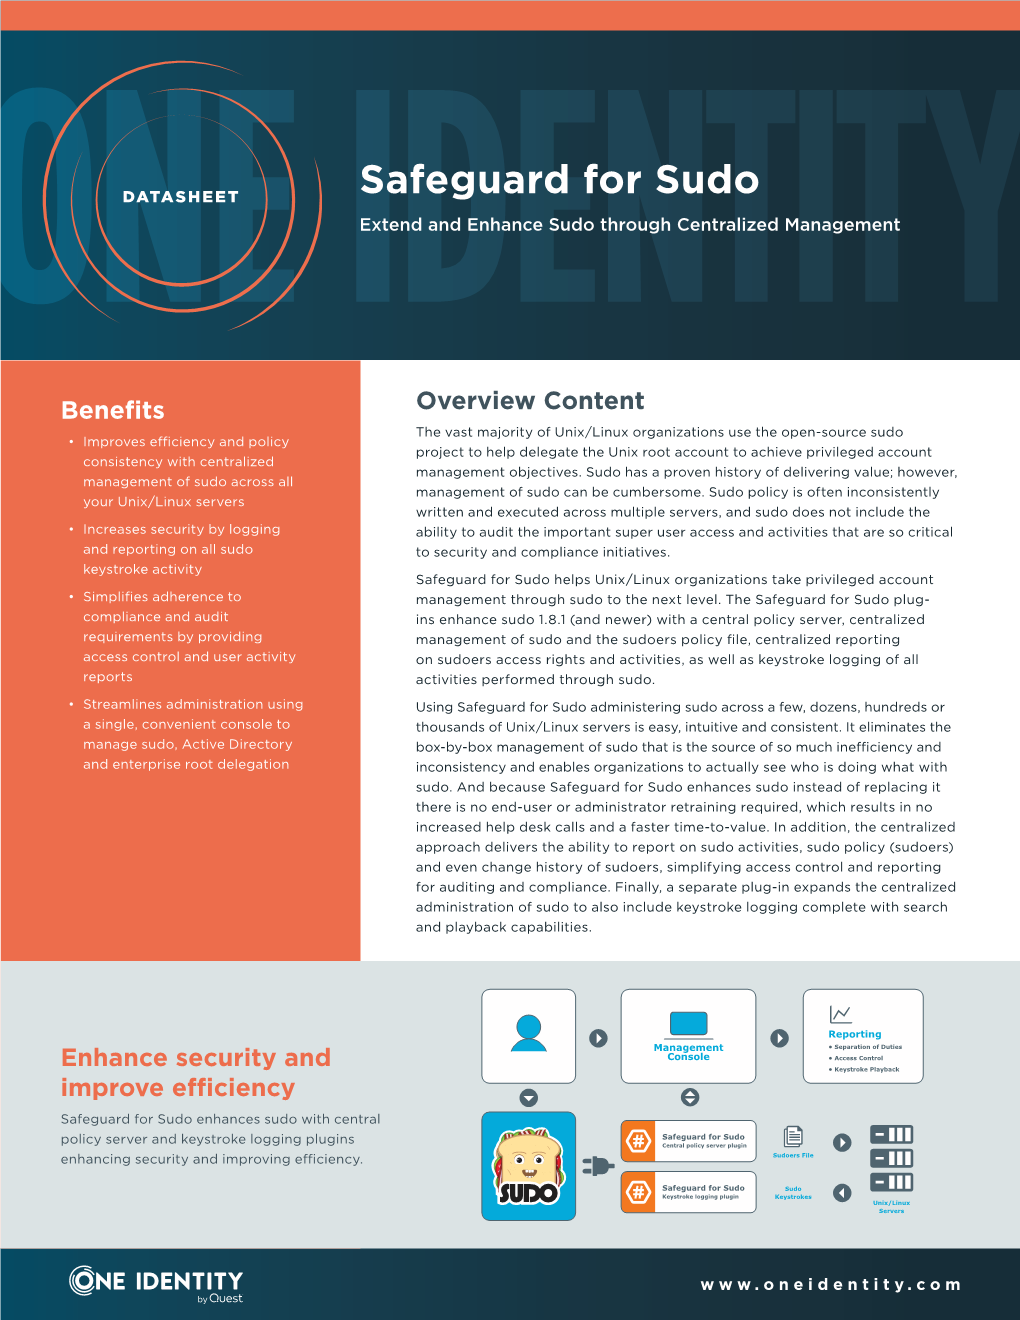 One Identity Safeguard for Sudo